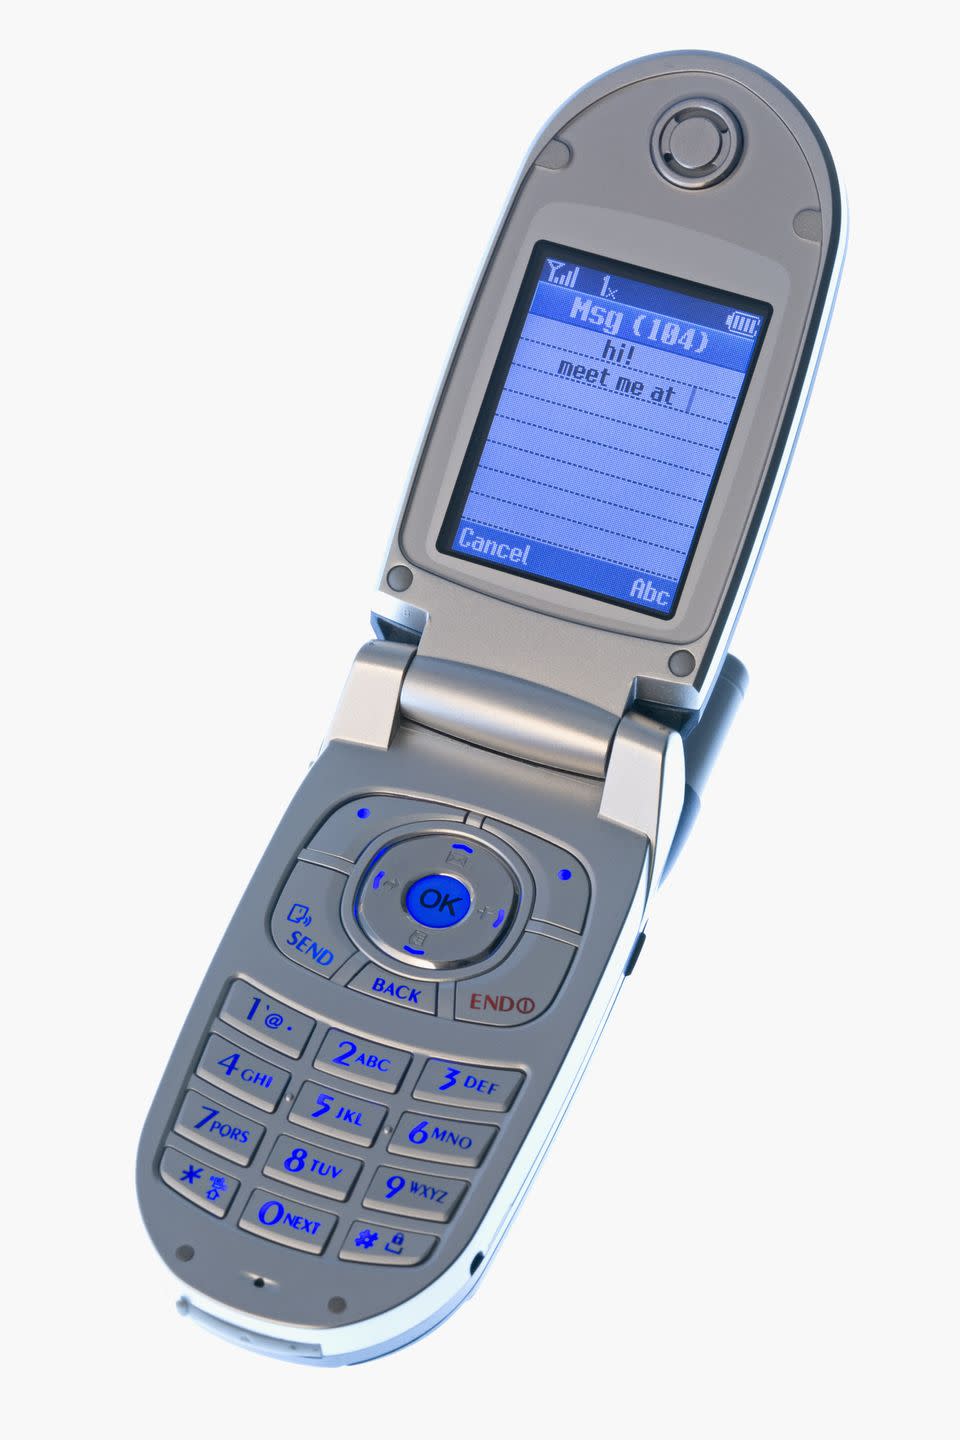 19) Old Phones